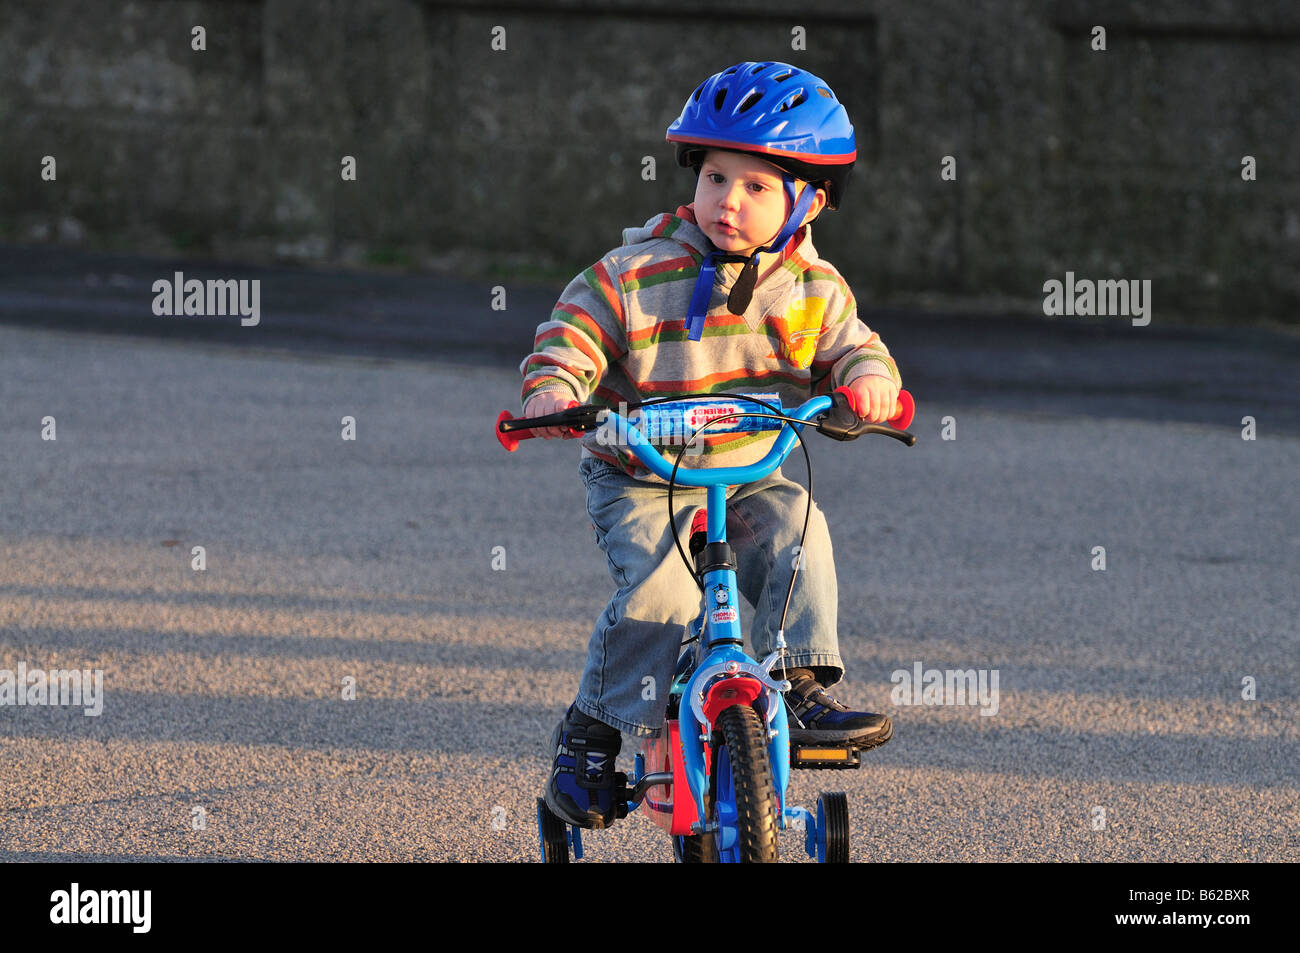 Boy [3 years] infant riding bicycle bike stabilizers [hard work ]effort pushing peddles hard hat helmet Stock Photo